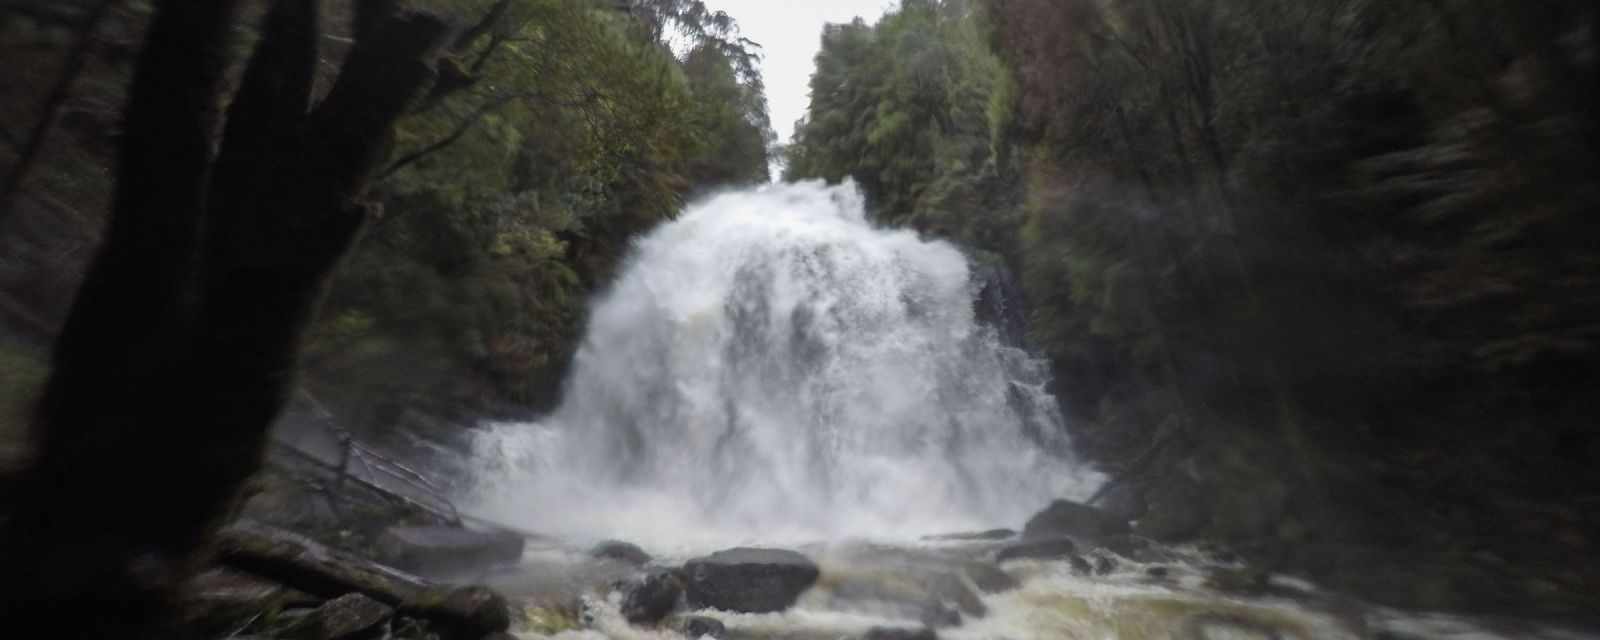 Nelson Falls at Lyell Highway in Tasmania